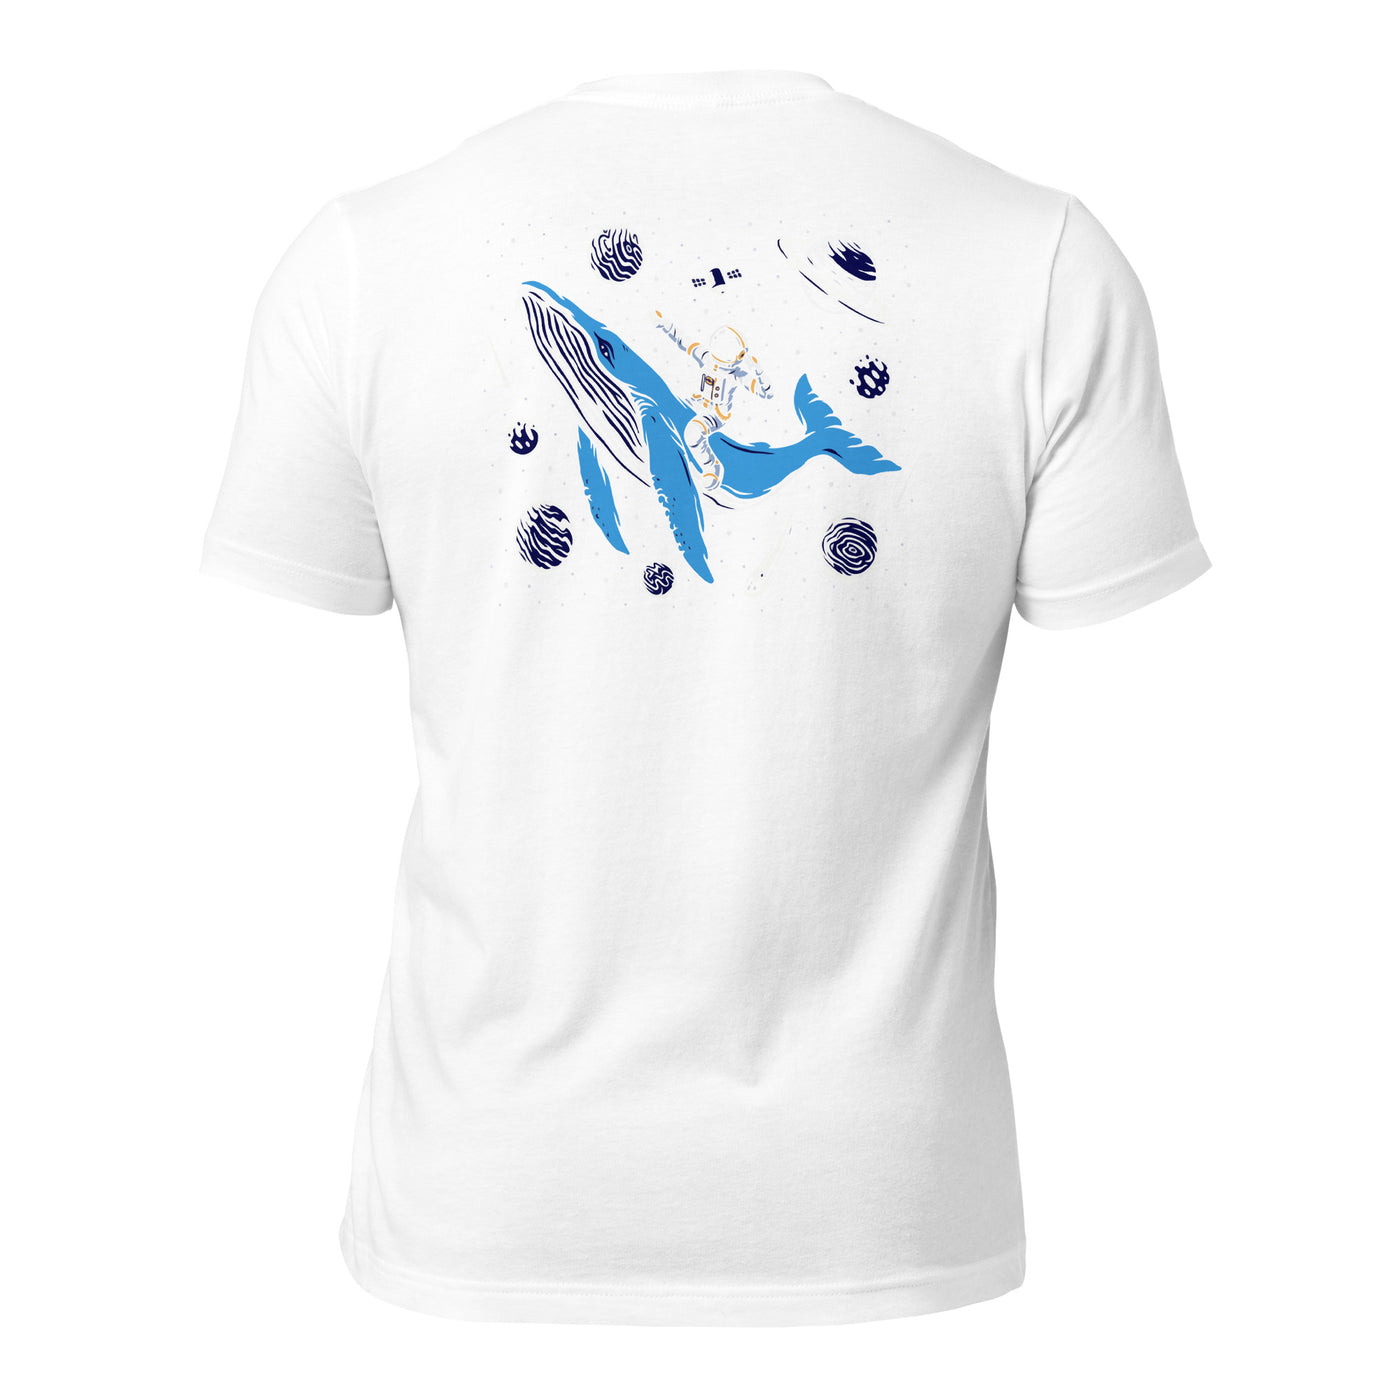 Ride a Whale - Unisex T-shirt